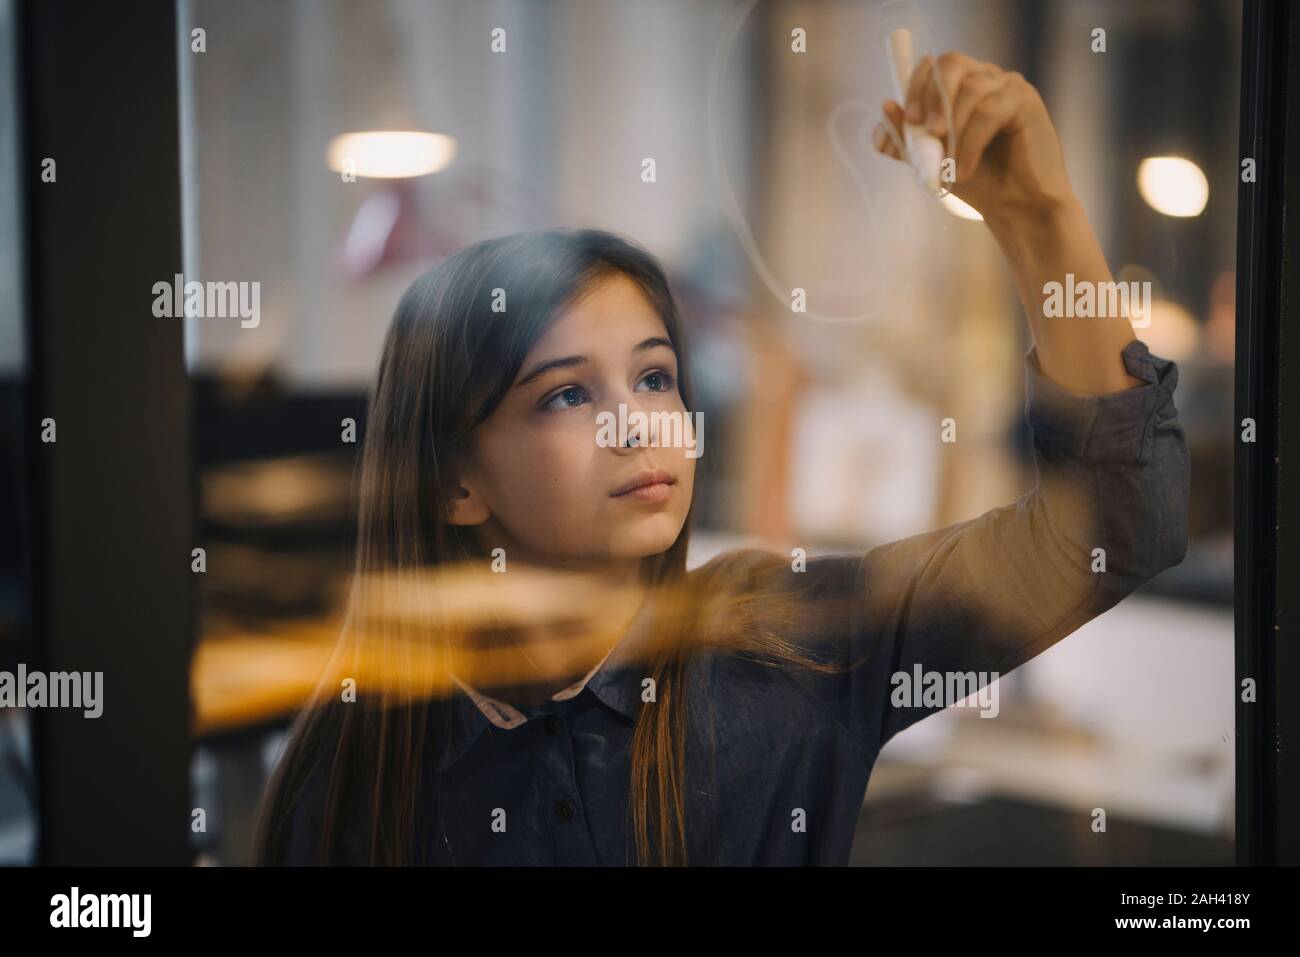 Girl dessin sur vitre in office Banque D'Images